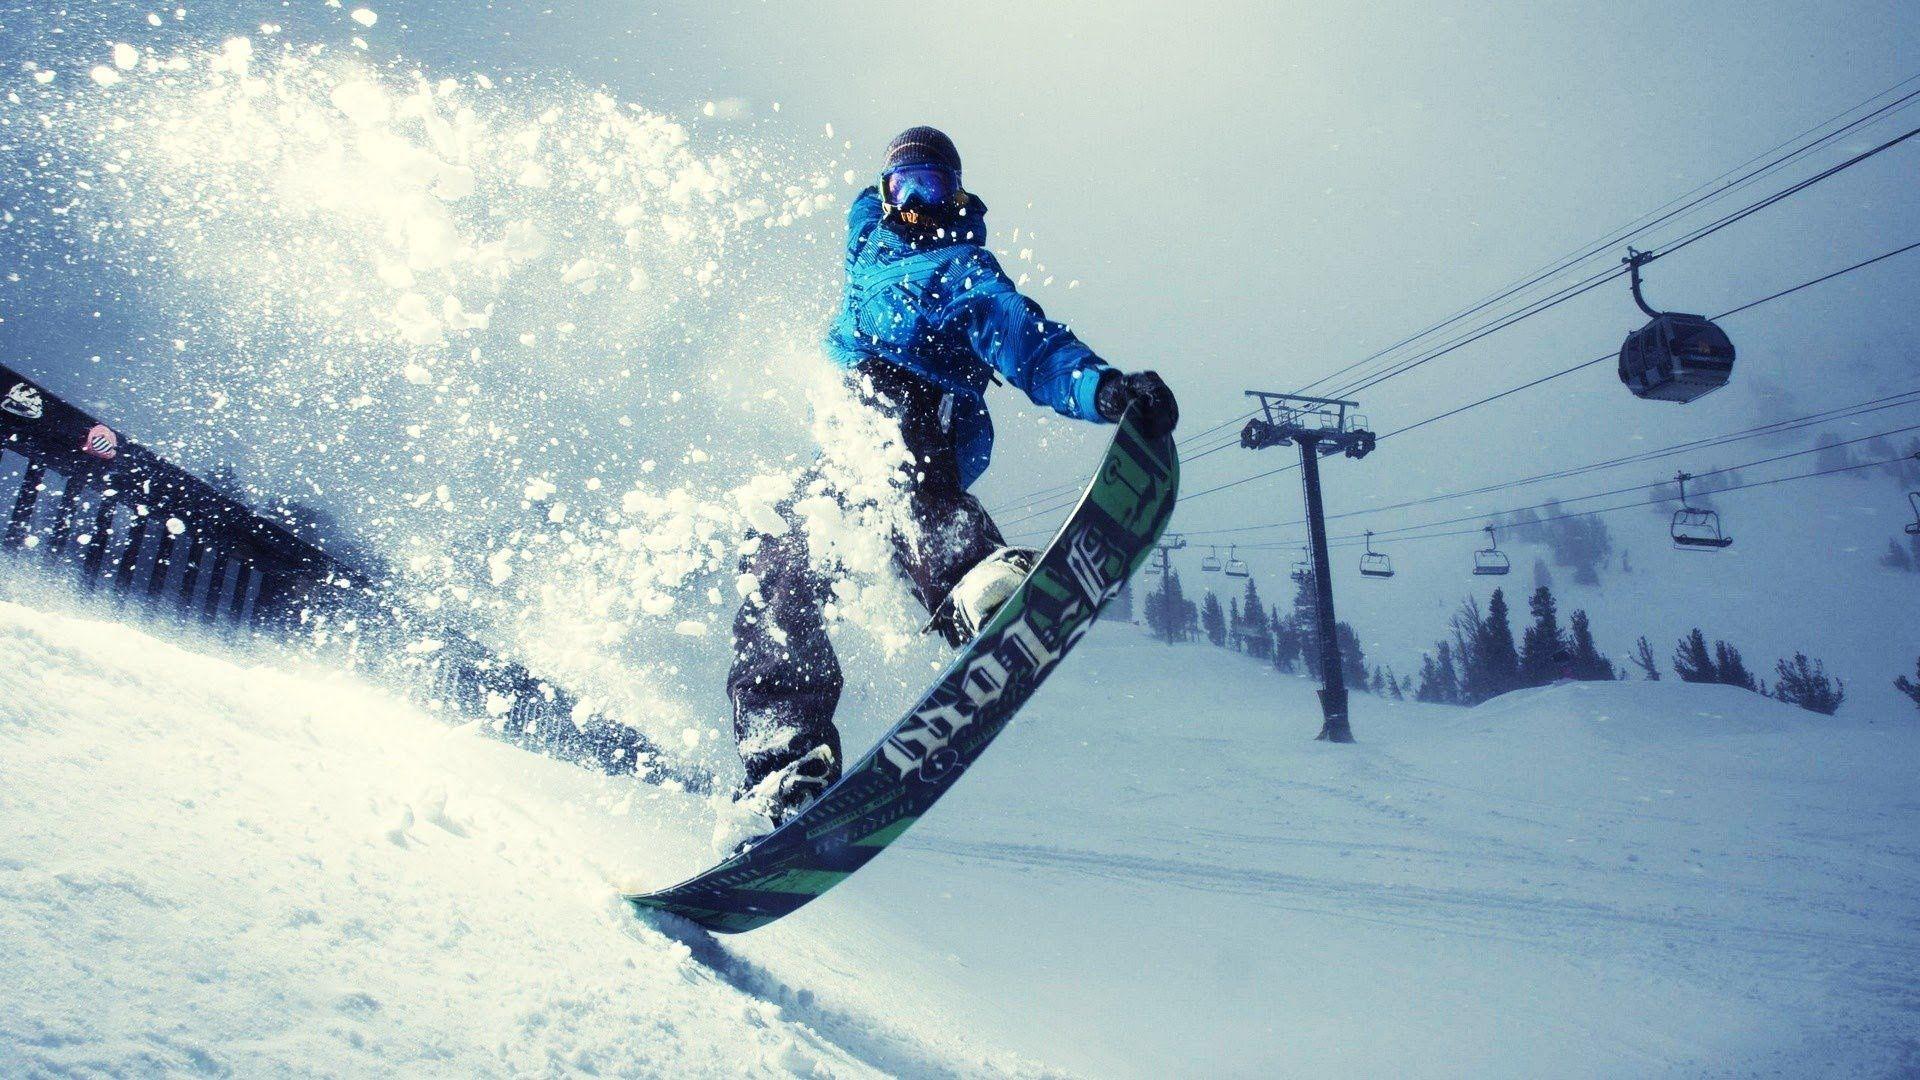 1080p HD! Snowboard Freestyle